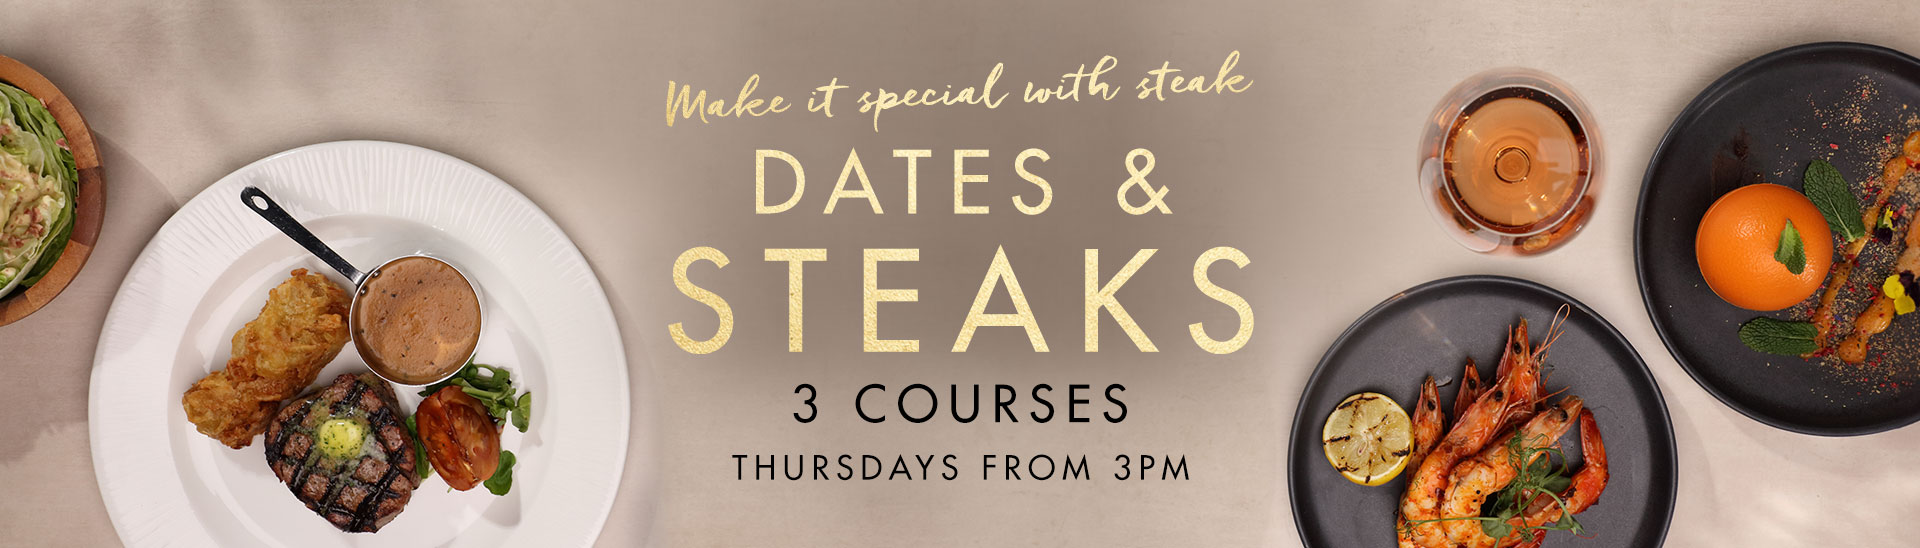 Dates & Steaks at Miller & Carter Manchester